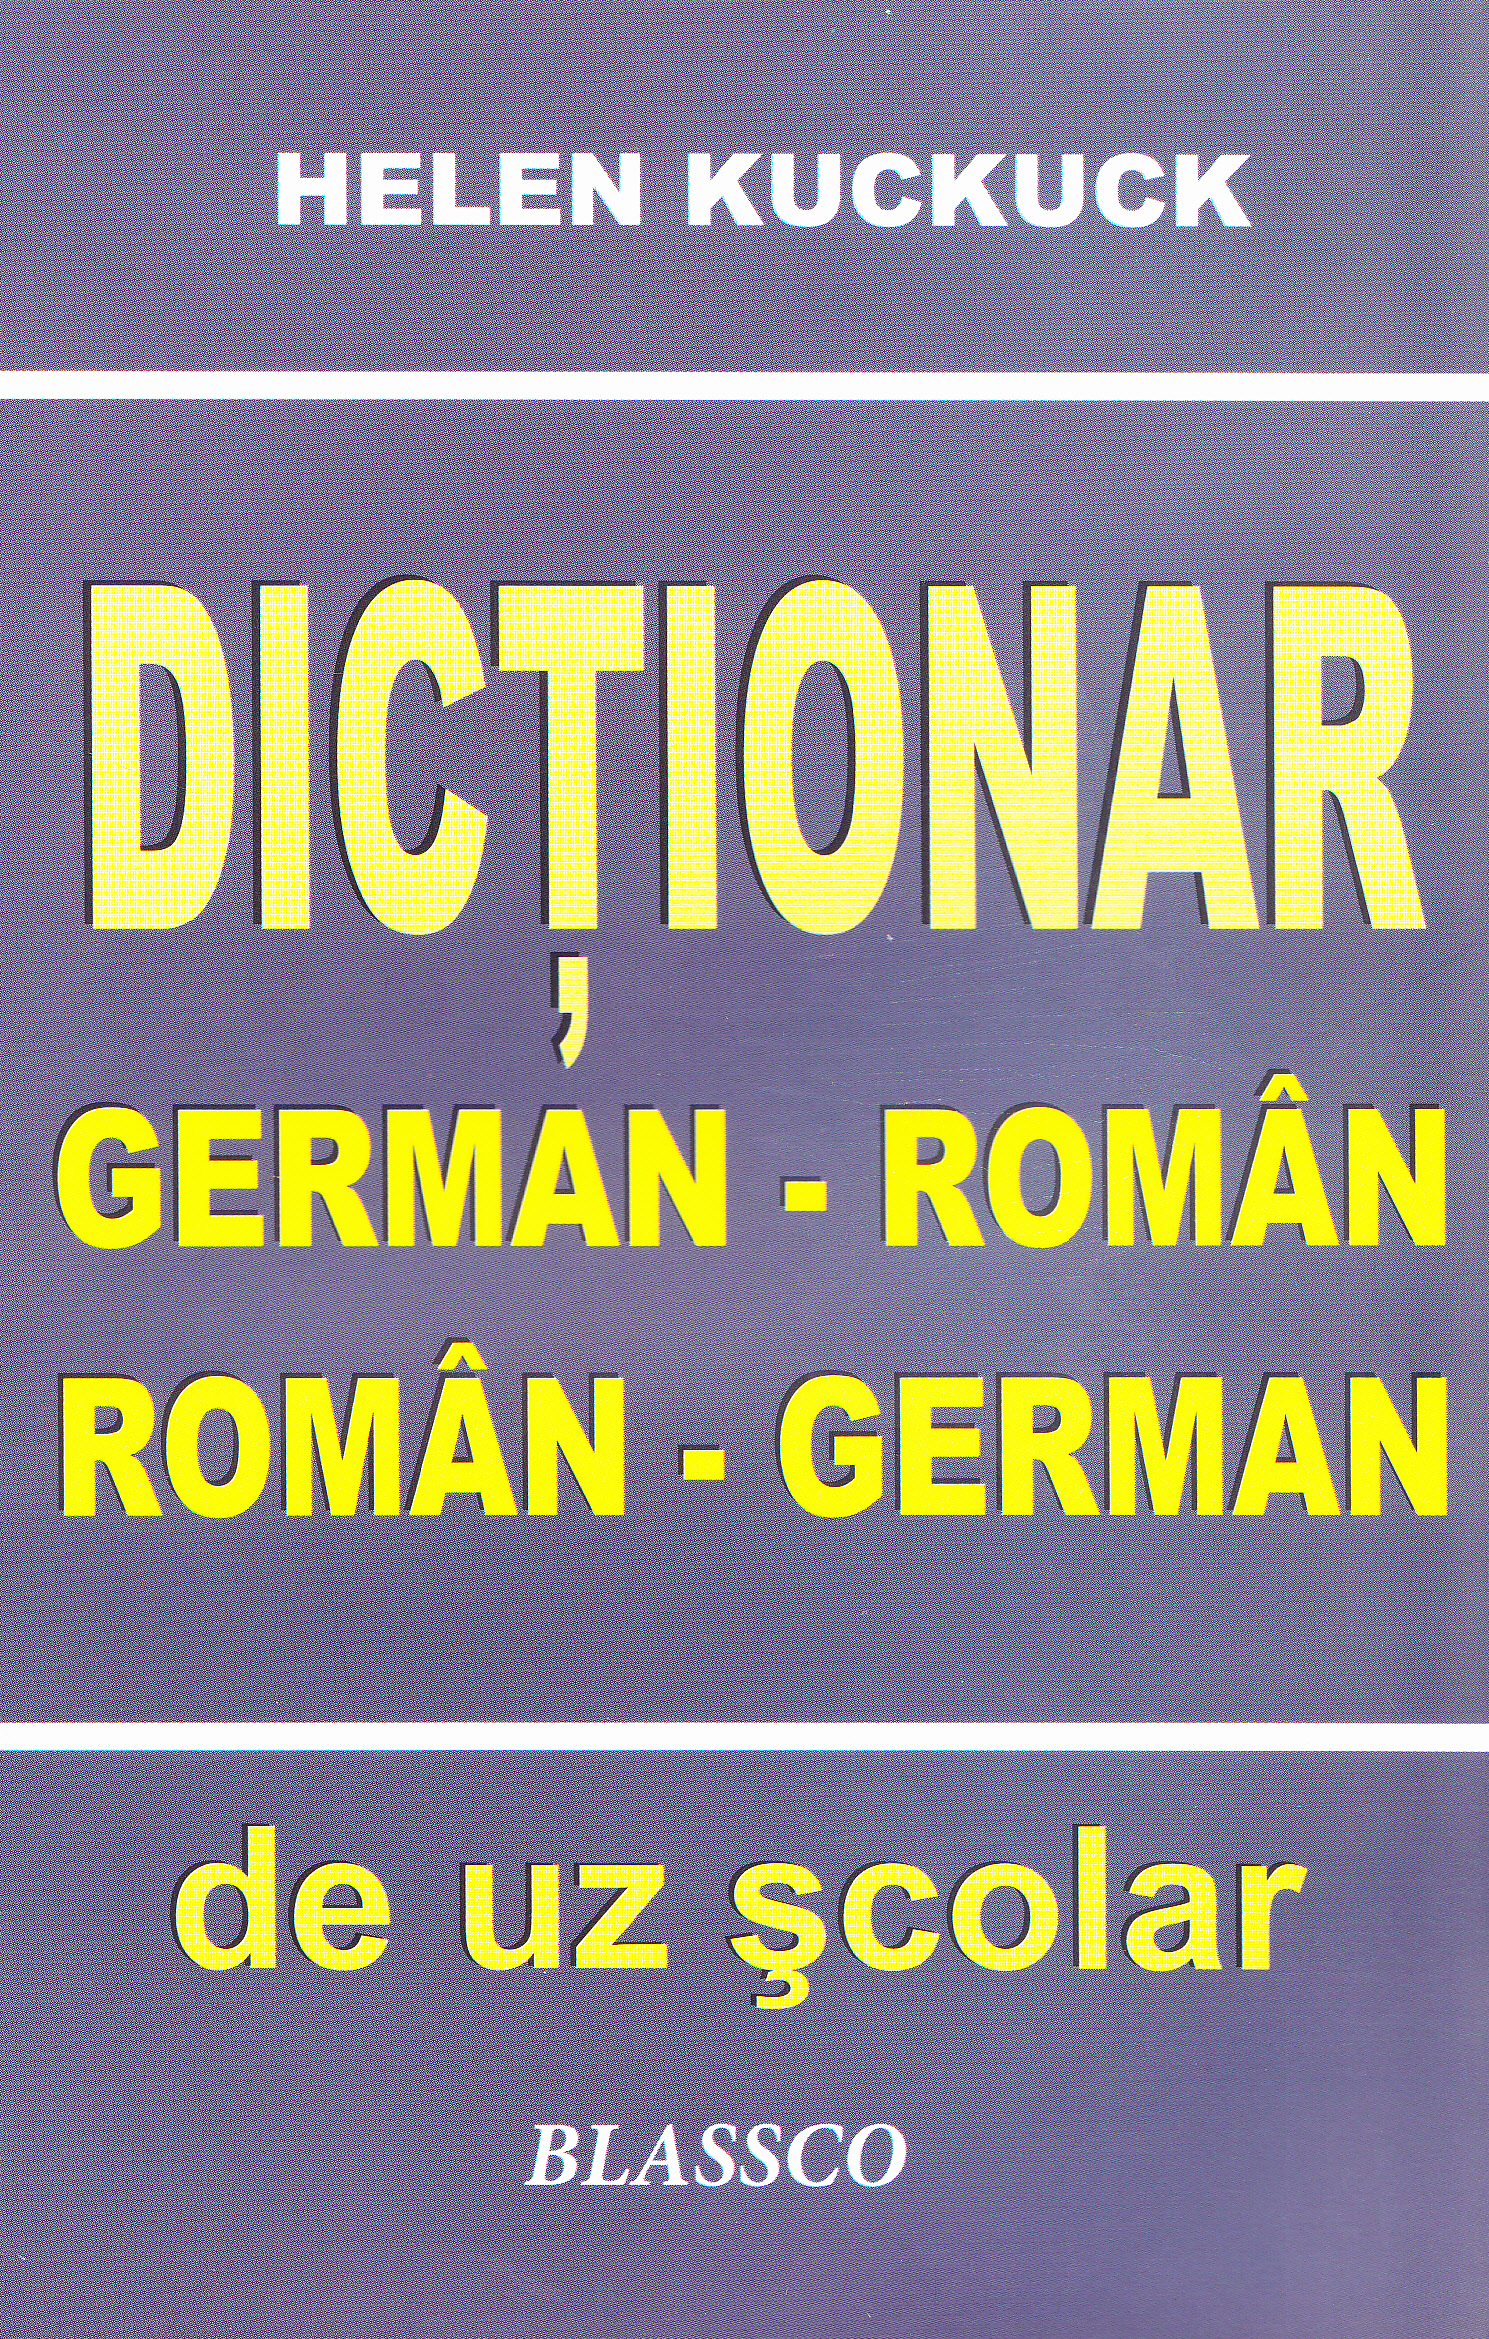 Dictionar german-roman , roman-german - Helen Kuckuck